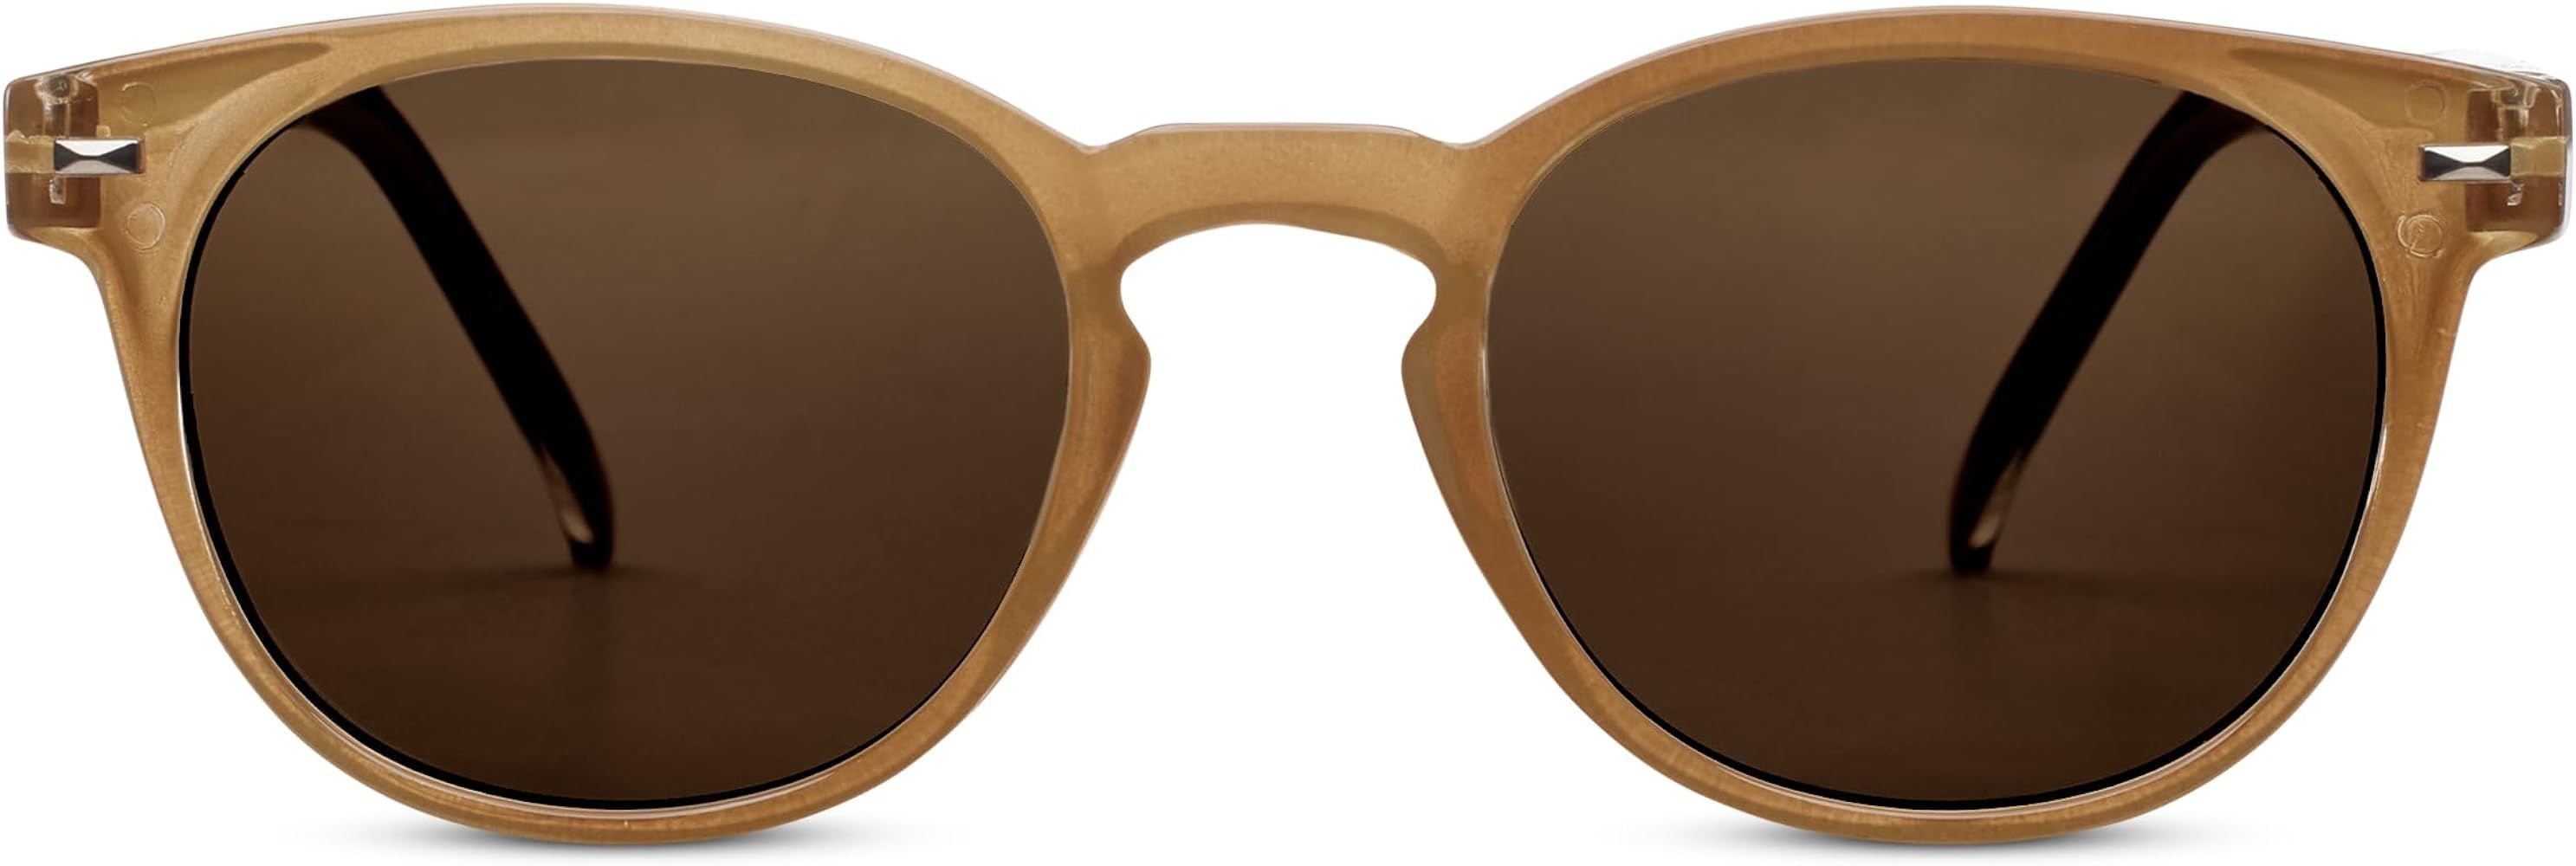 Peepers by PeeperSpecs Bohemian Round Sunglasses, Amber-Polarized | Amazon (US)